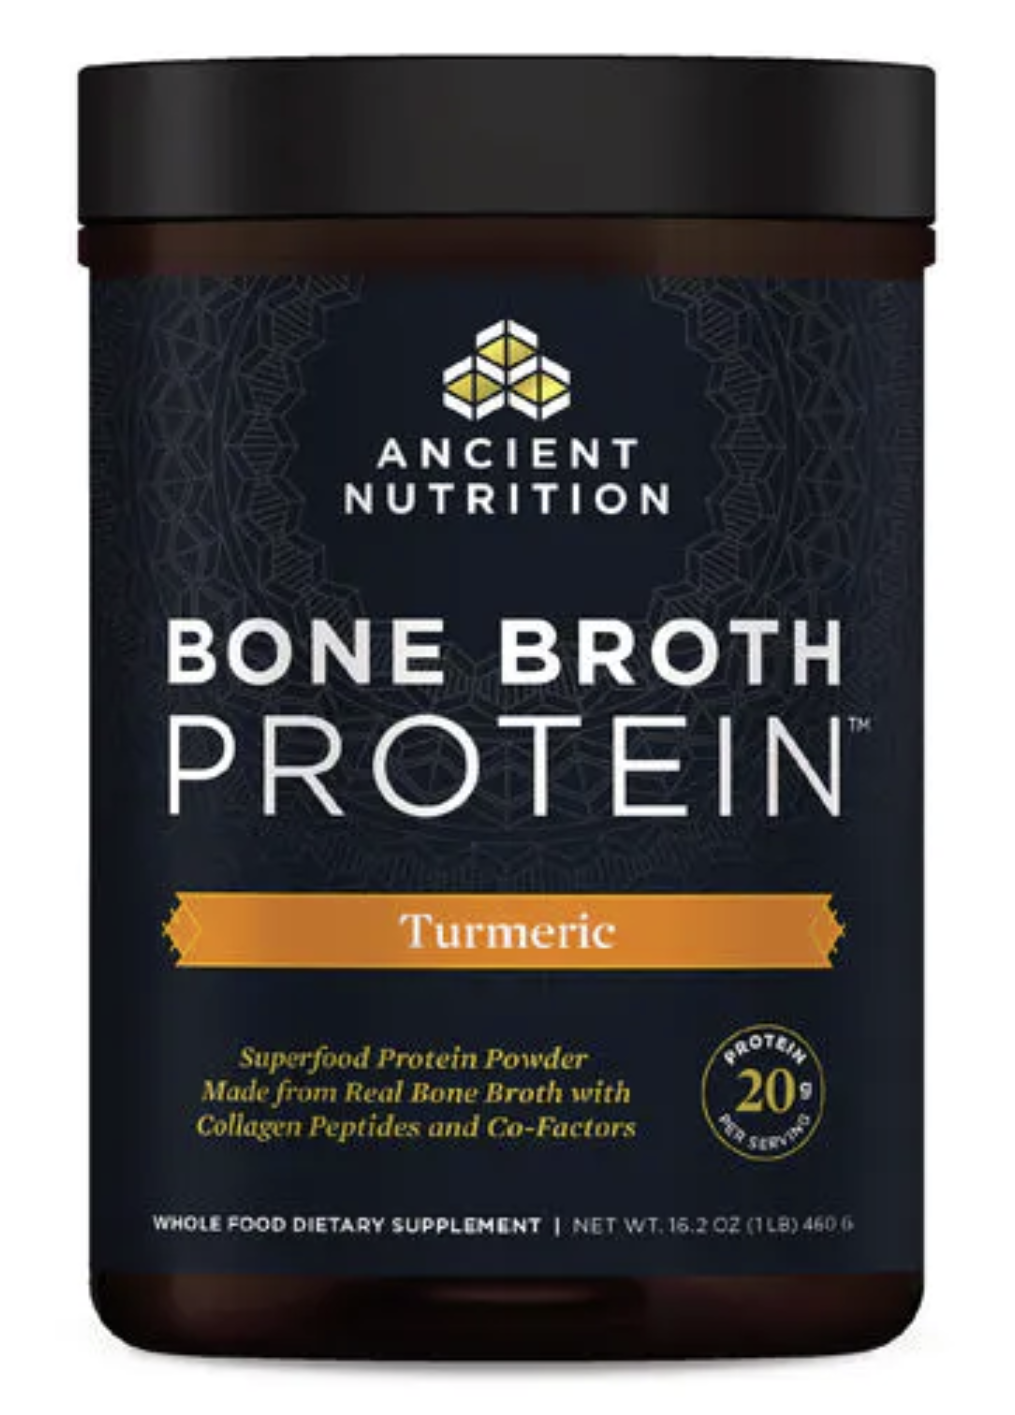 Ancient Nutrition Bone Broth Protein Turmeric  16.2oz